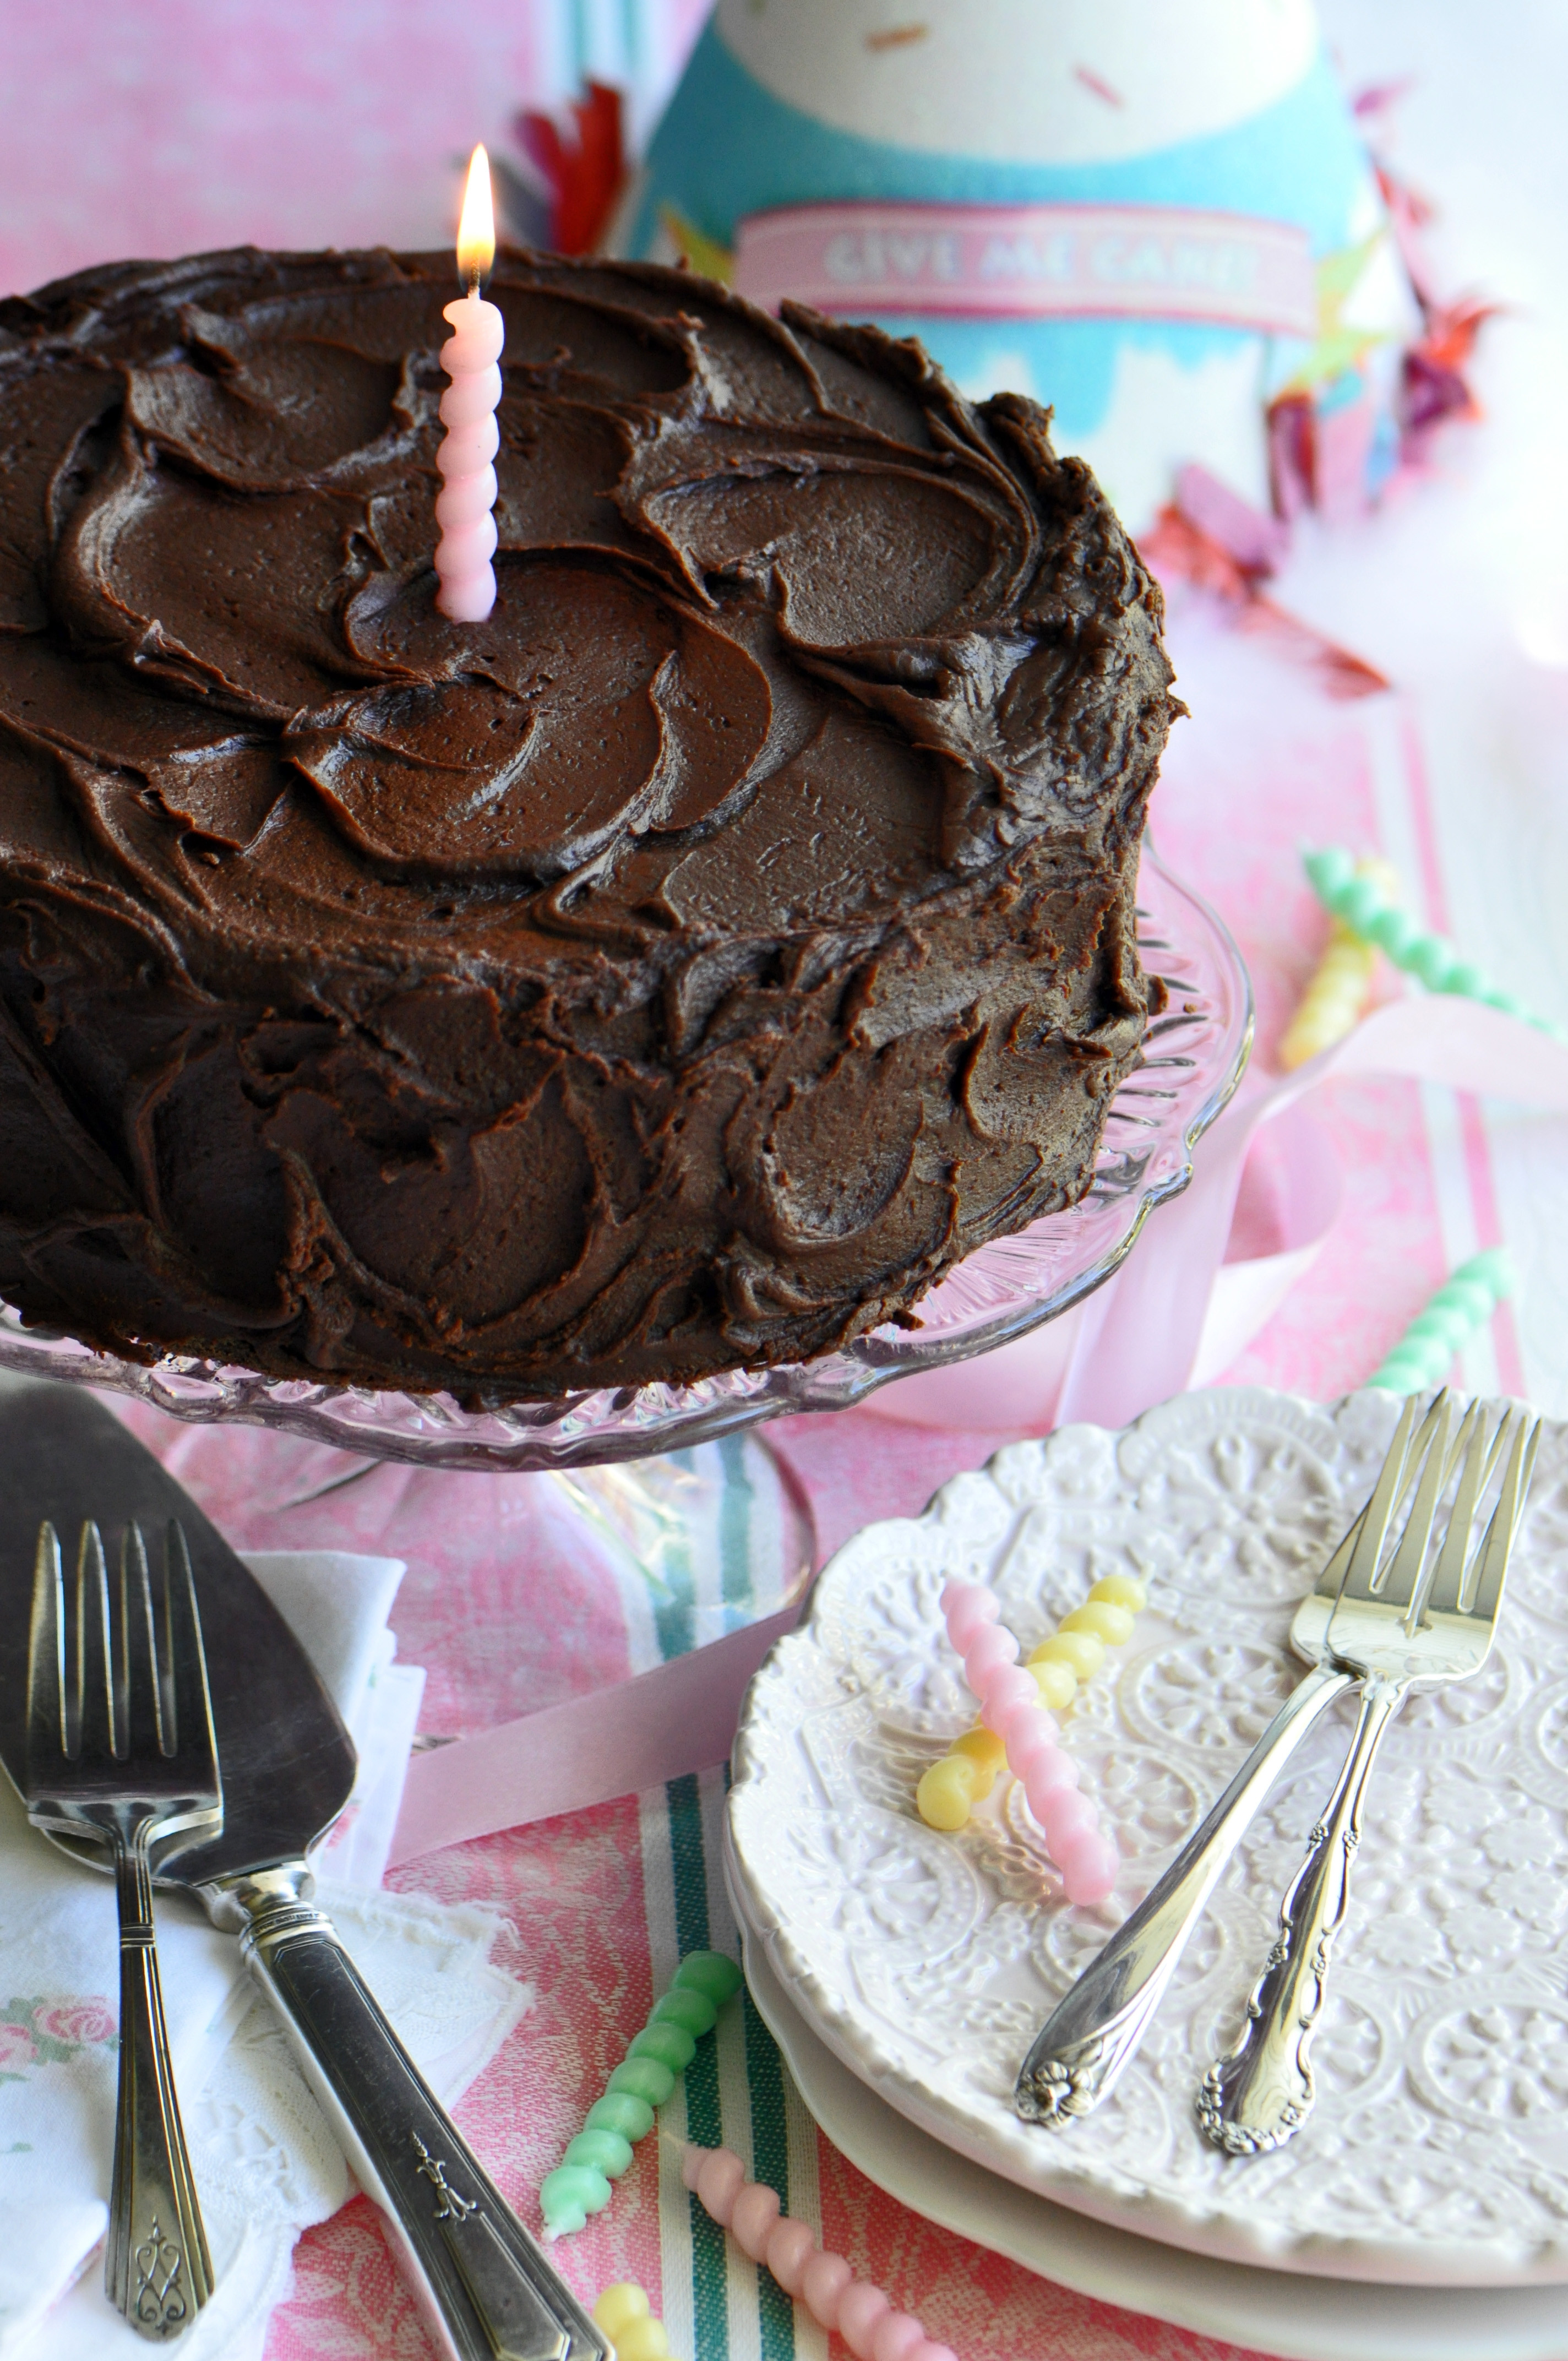 Best ideas about Chocolate Birthday Cake Recipe
. Save or Pin Chocolate Fudge Birthday Cake Baking Recipe Now.